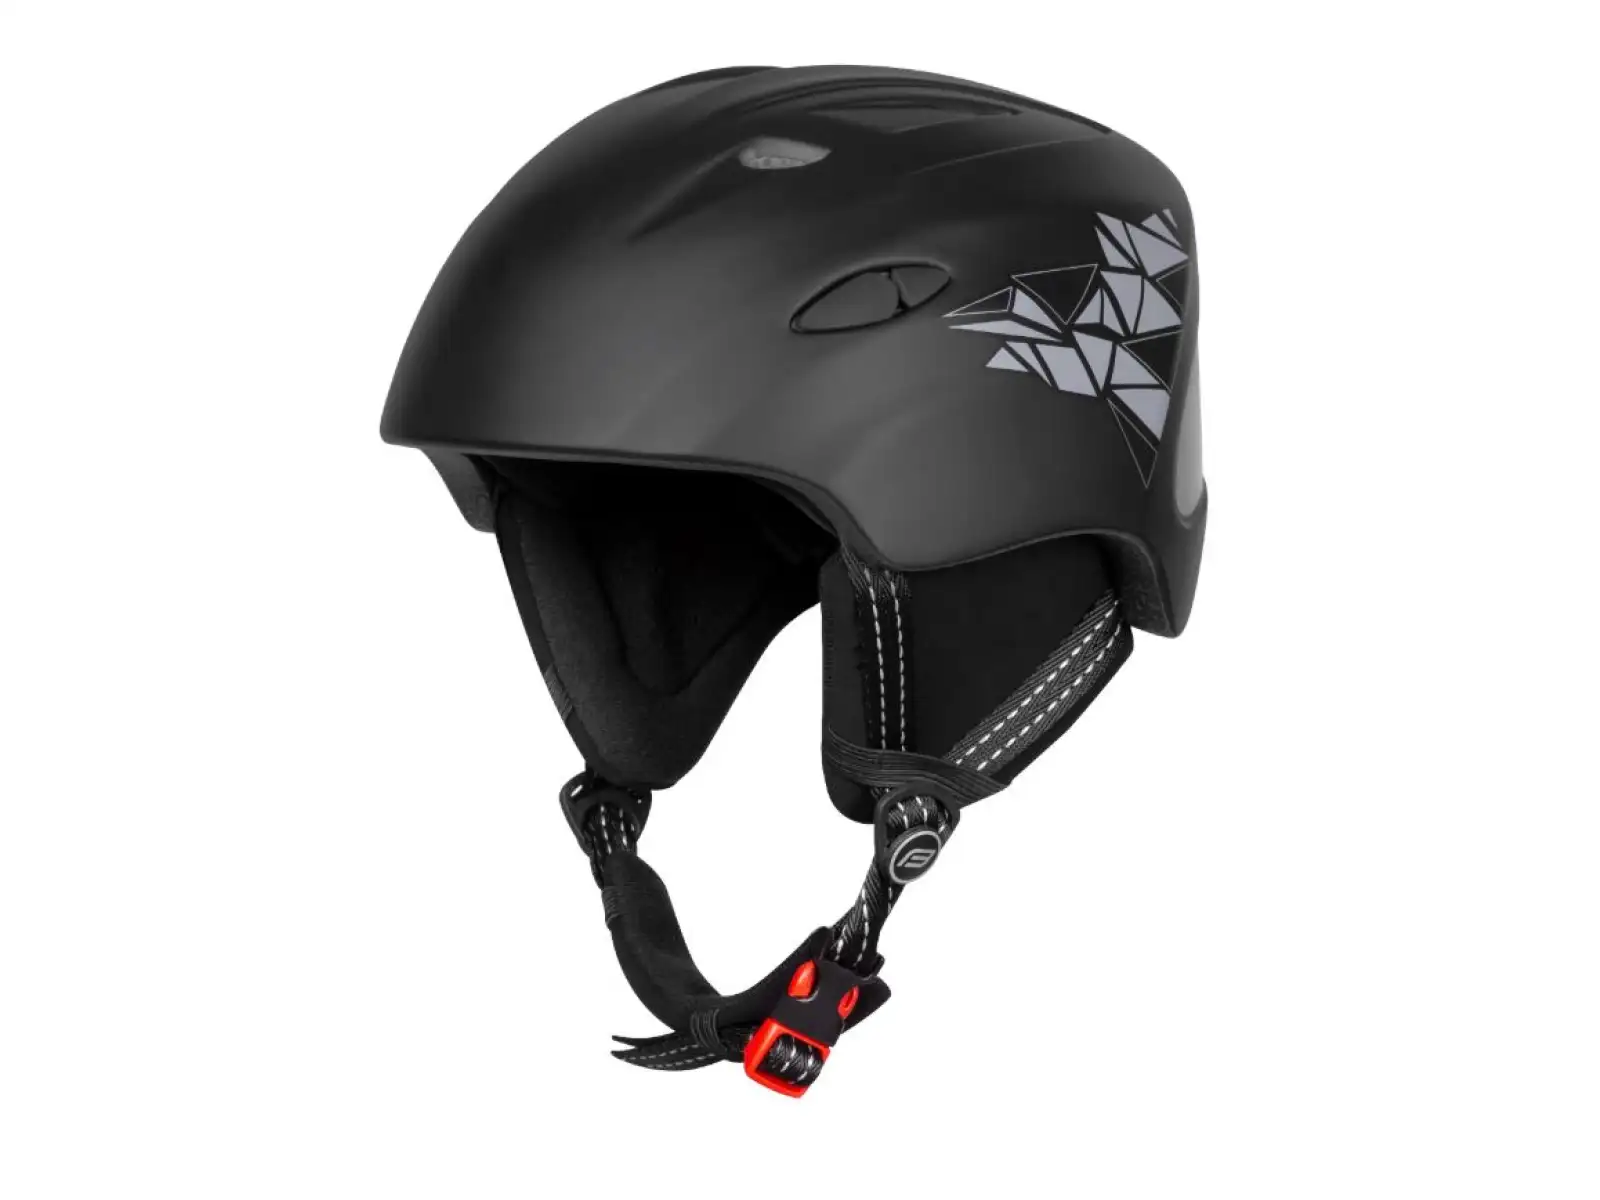 Force Ski lyžařská helma černá/šedá